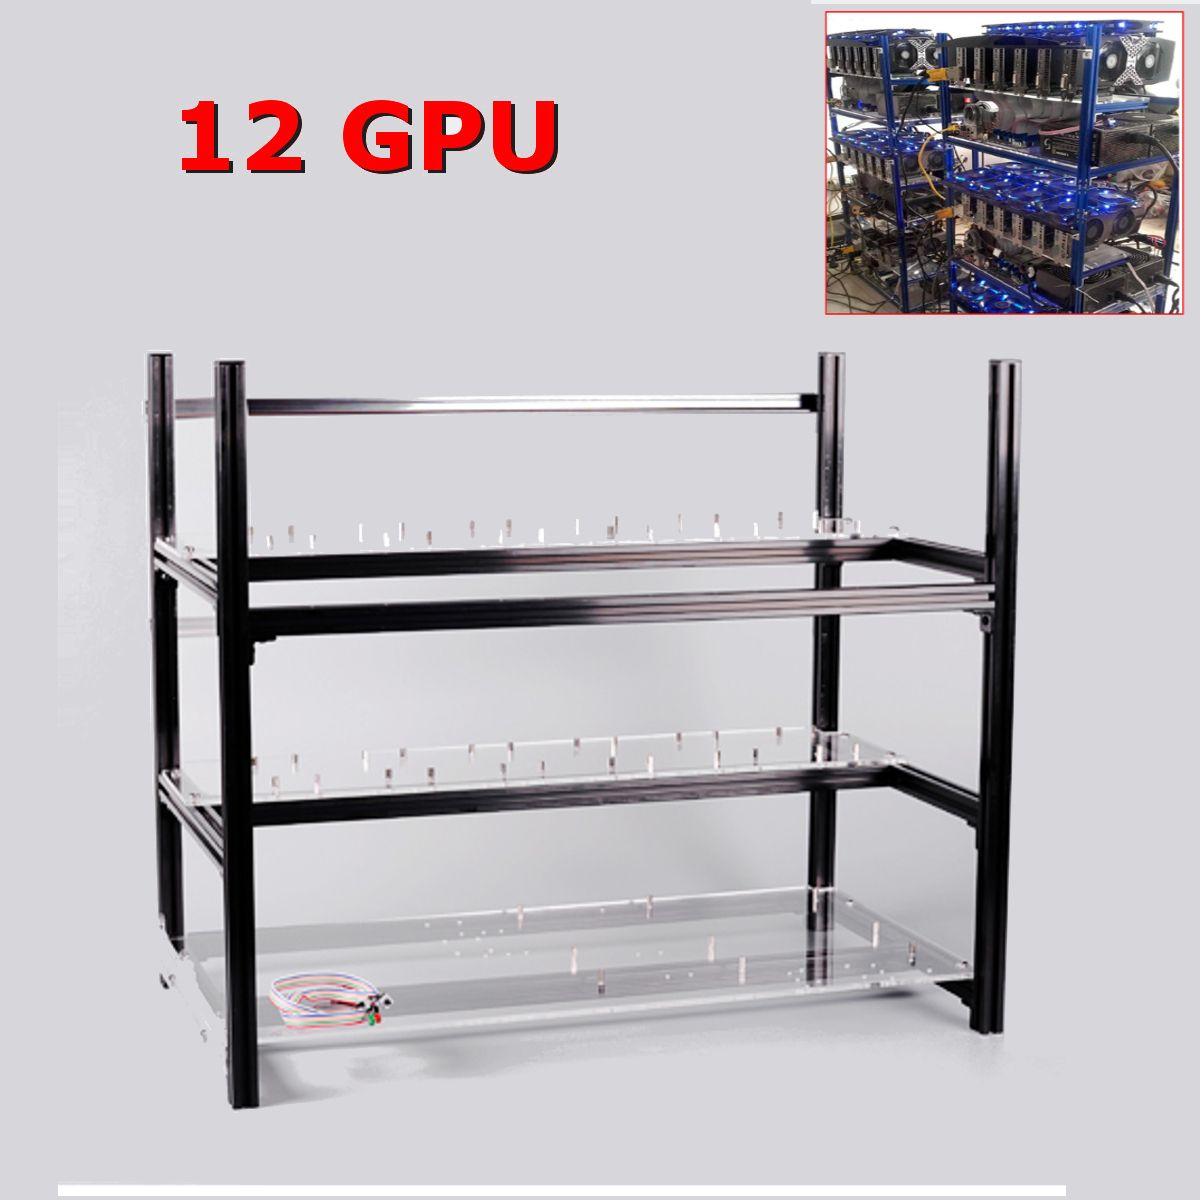 12-GPU-Open-Air-Miner-Frame-Aluminum-Stackable-Mining-Rig-Case-ETH-BTC-Ethereum-1205607